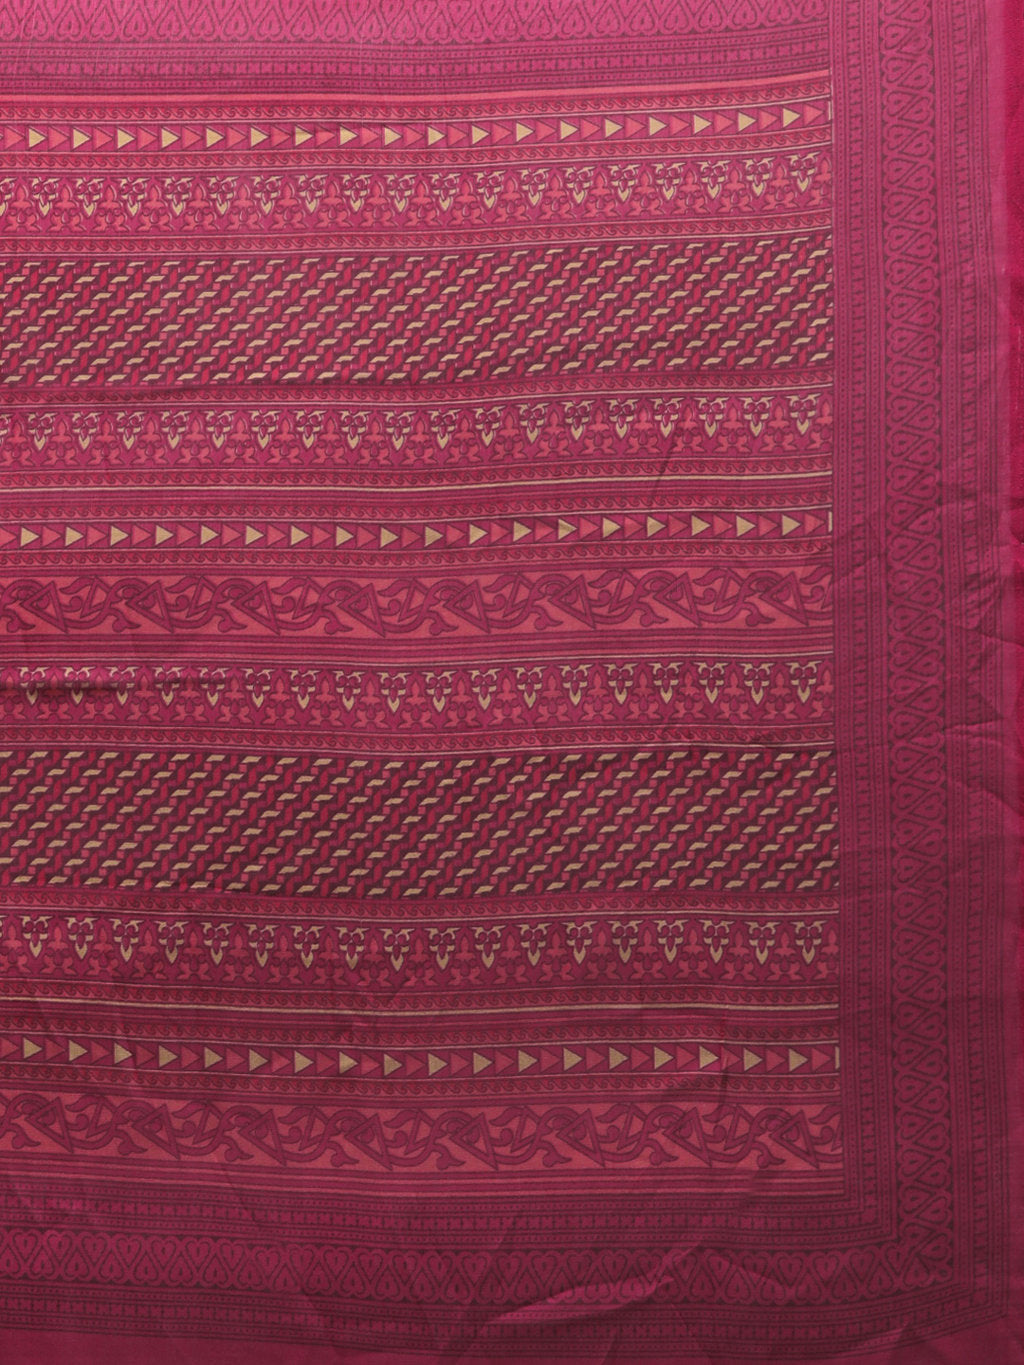 Women's Magenta Crepe Printed Daily Wear Saree - Sangam Prints